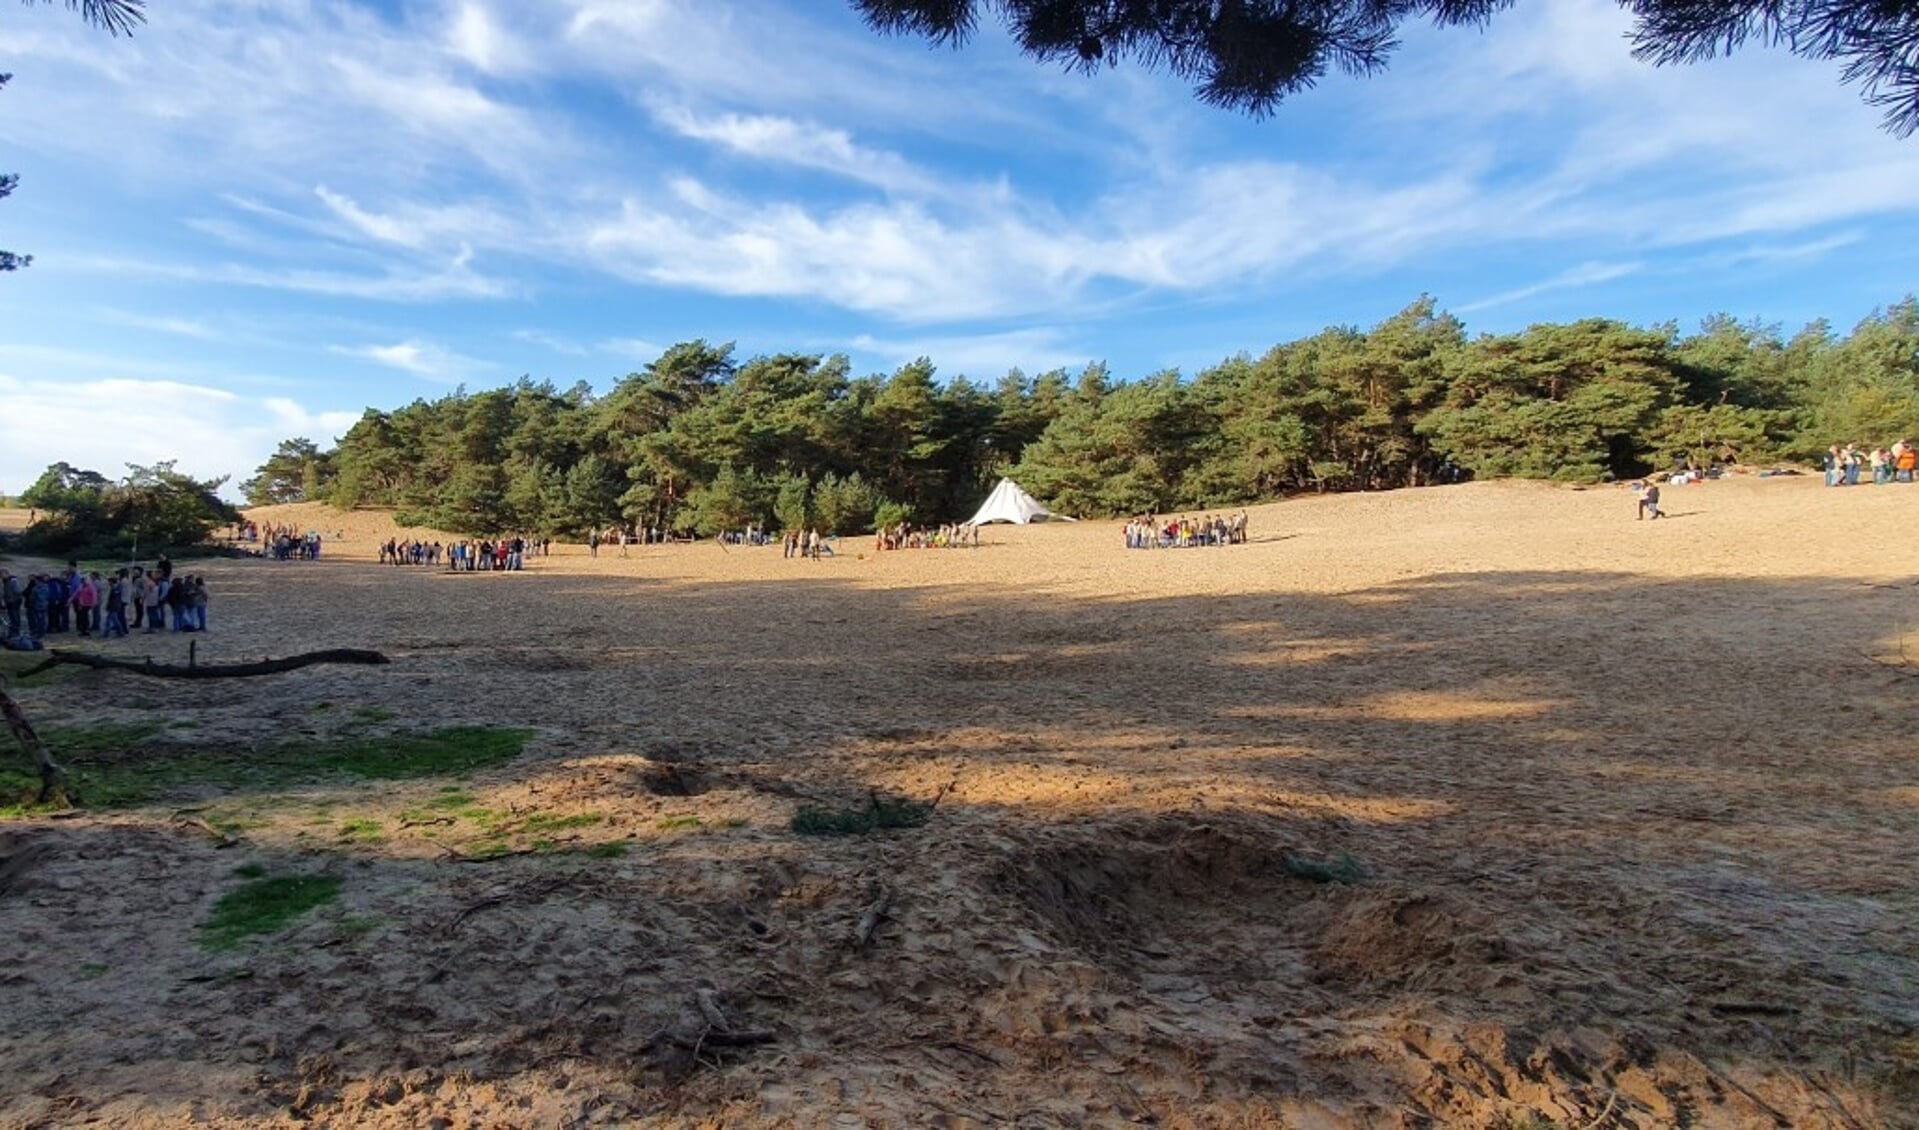 Jaarlijkse herfst activiteit scouts - Regio Neder Veluwe - Wekeromse zand